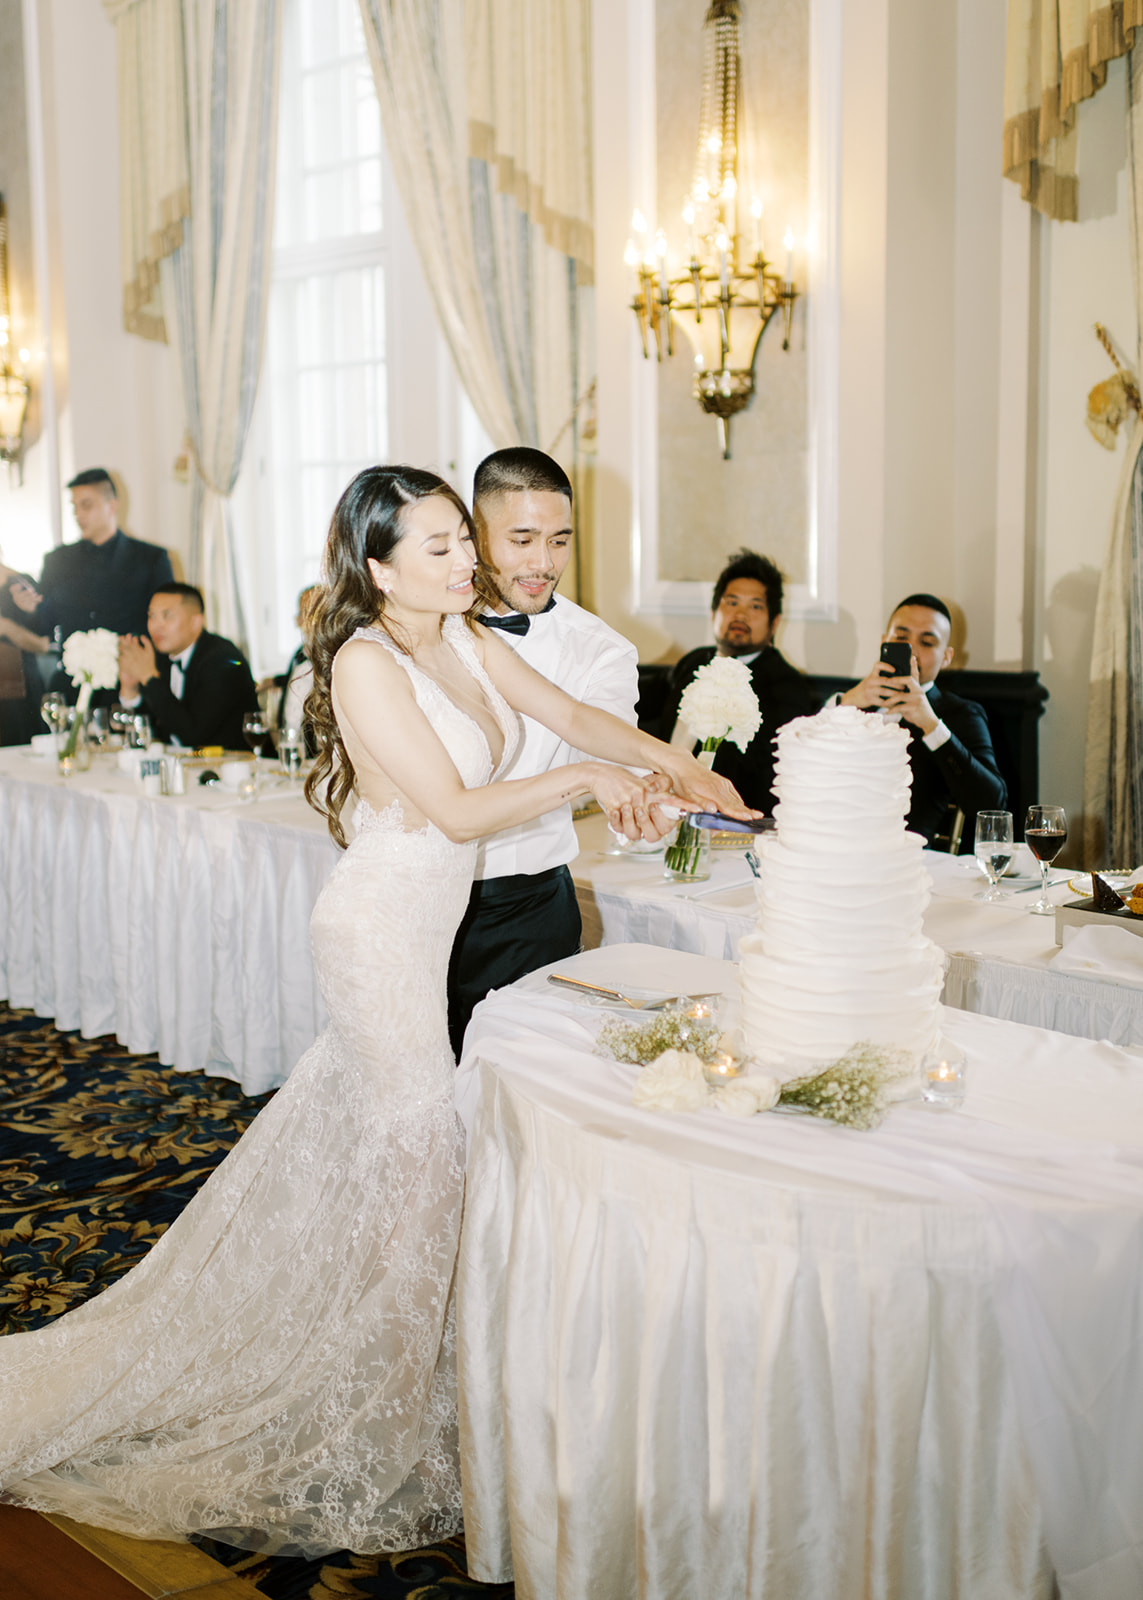 cake cutting at modern all white wedding, luxe gold and white wedding, modern wedding inspiration in Edmonton